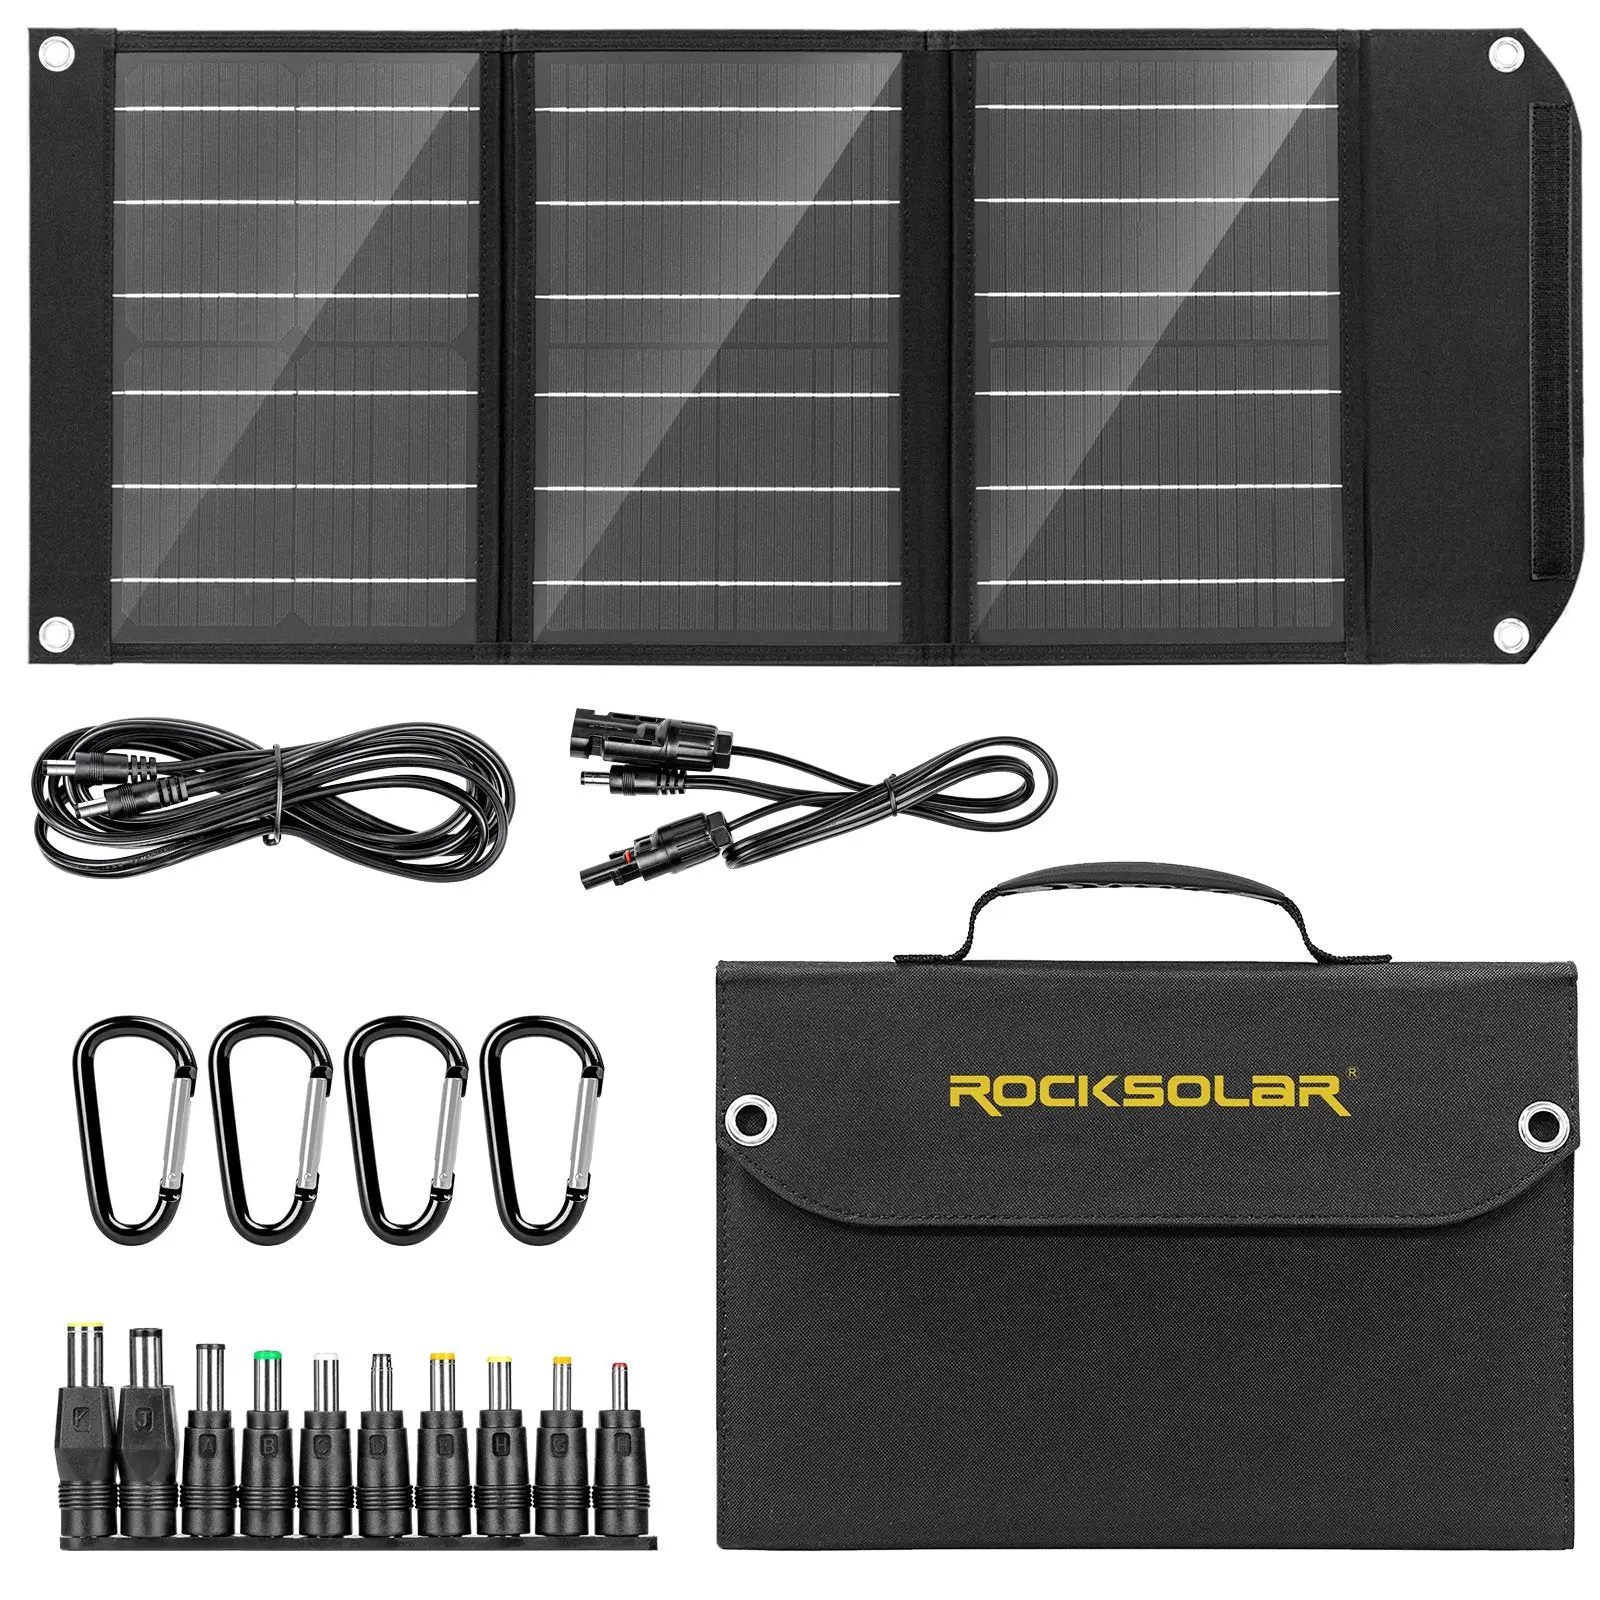 ROCKSOLAR-30W-12-Foldable-Solar-Panel-Portable-USB-Solar-Battery-Charger_1024x1024@2x-26e3c269